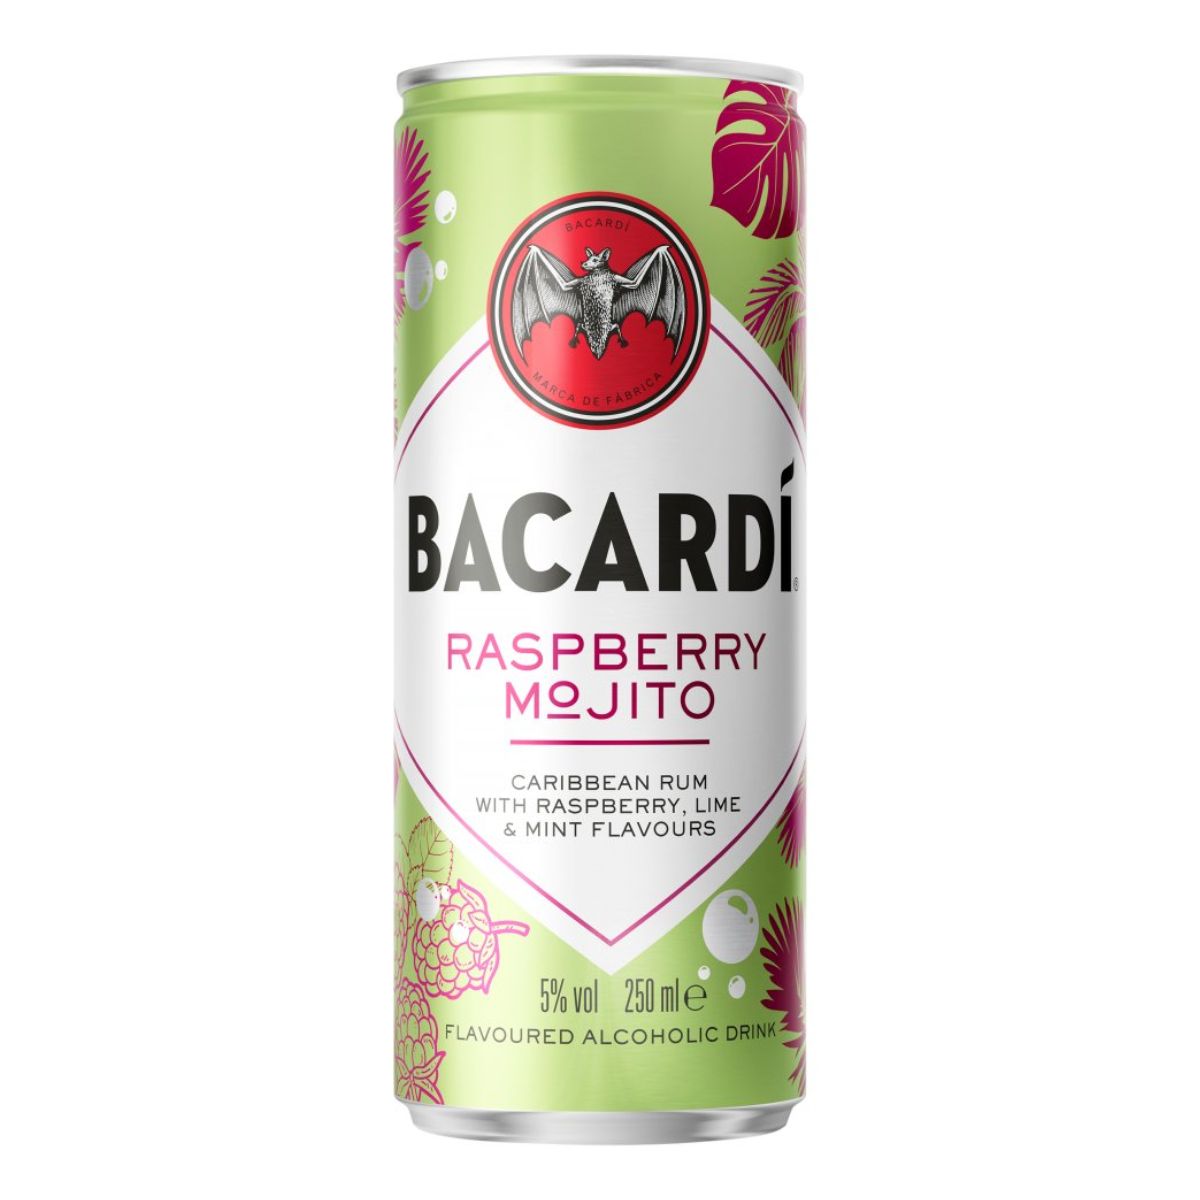 A can of Bacardi - Raspberry Mojito (5% ABV) - 250ml.